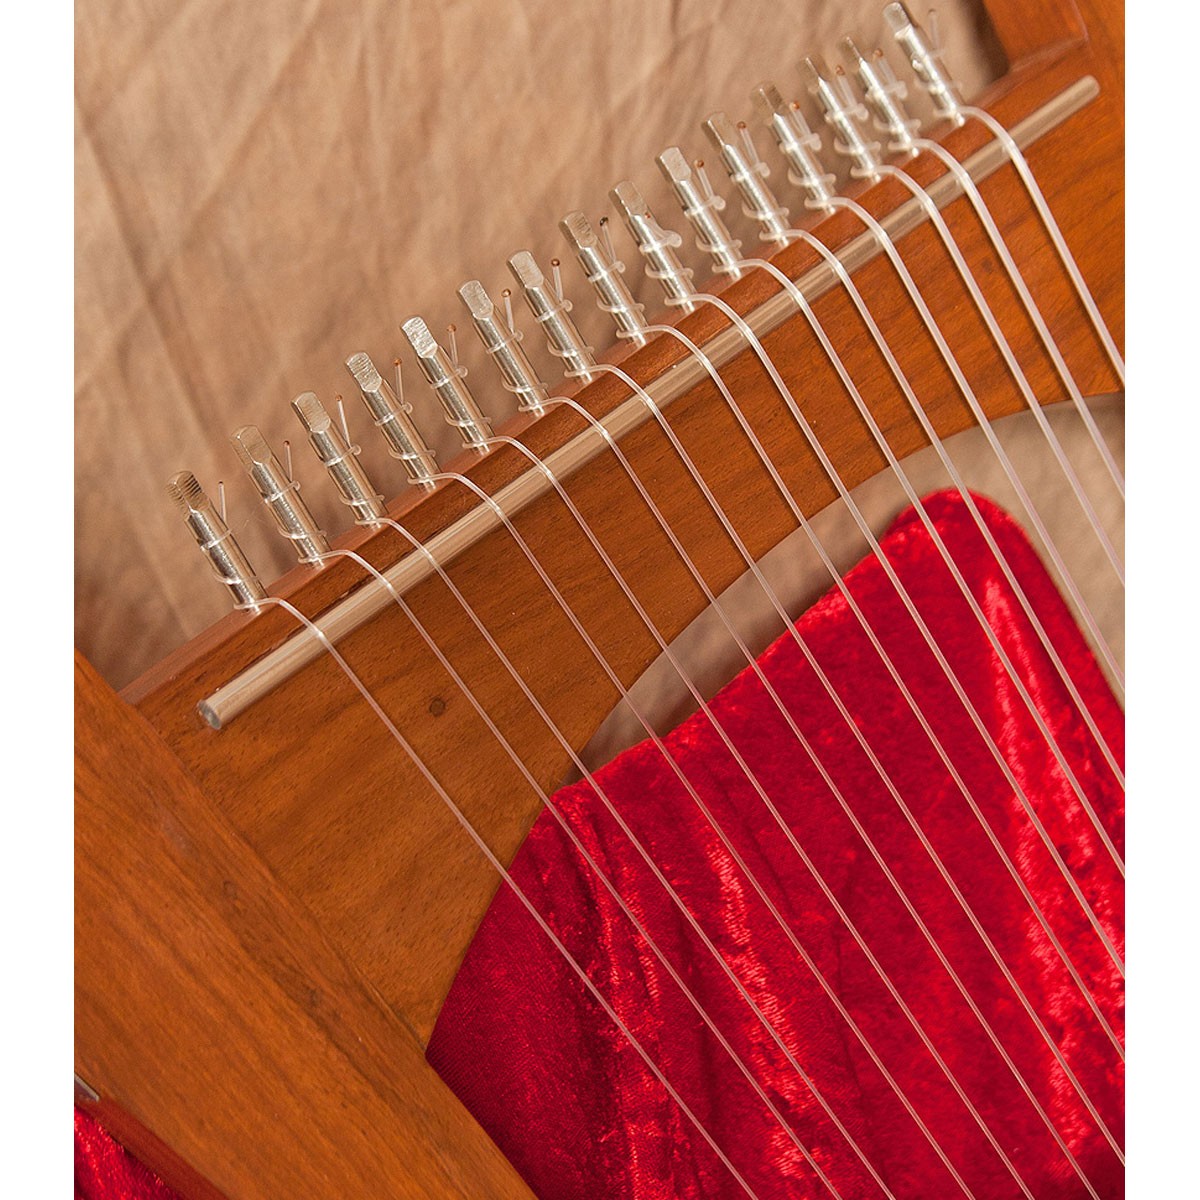 Nevel Harp Accessories